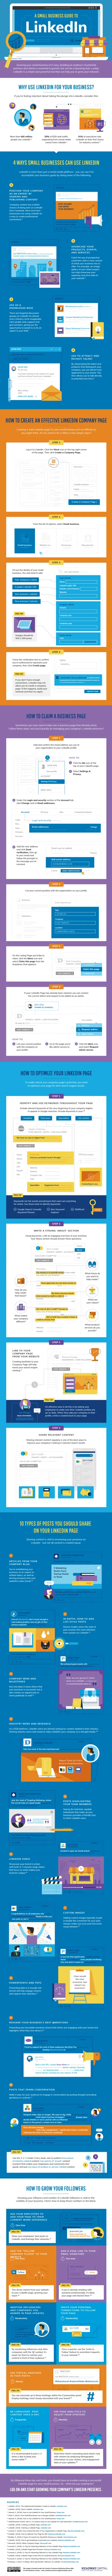 LinkedIn Sales Infographic